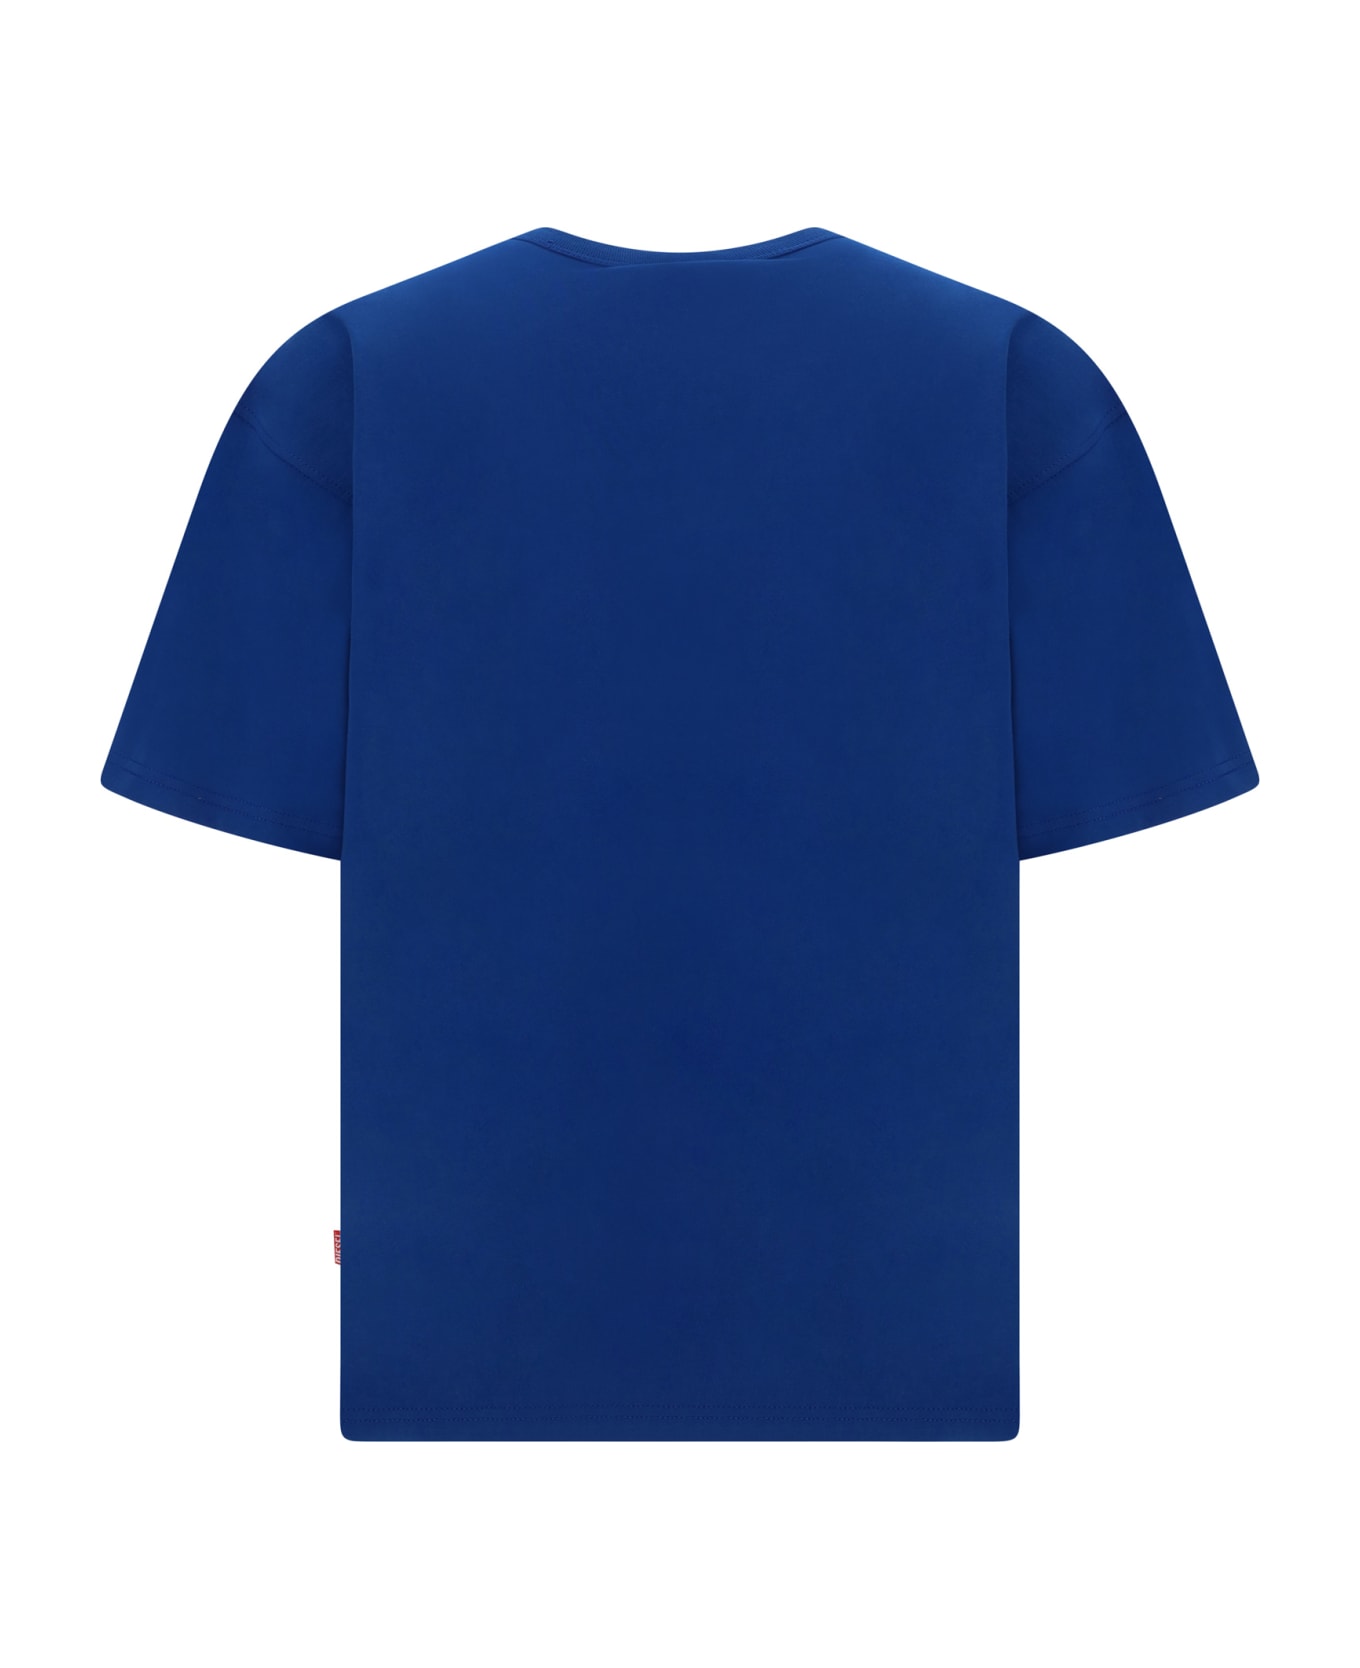 Diesel T-shirt - 428 - Classic Blue